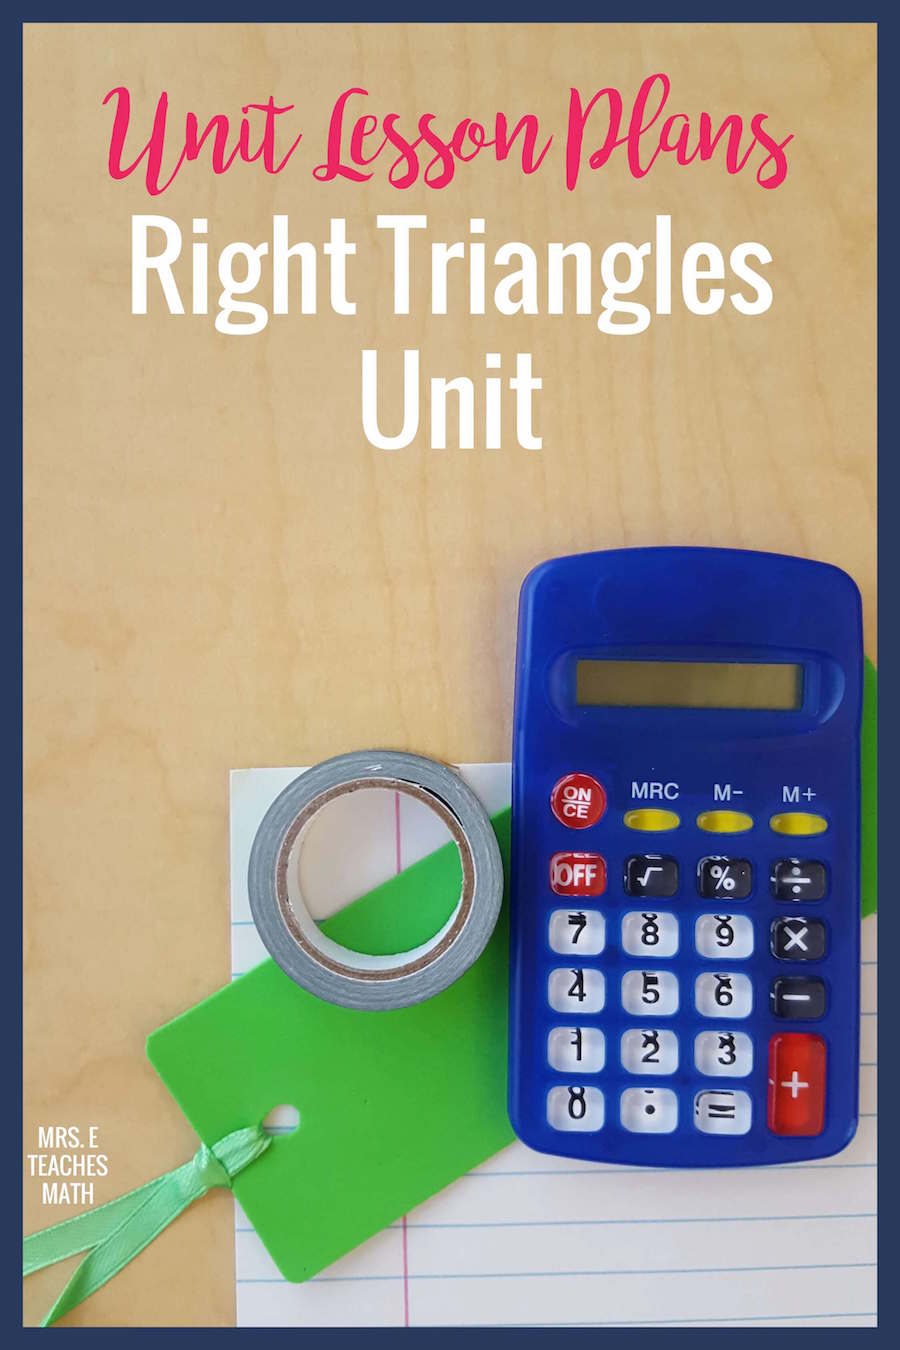 Right Triangles Unit | Mrs. E Teaches Math